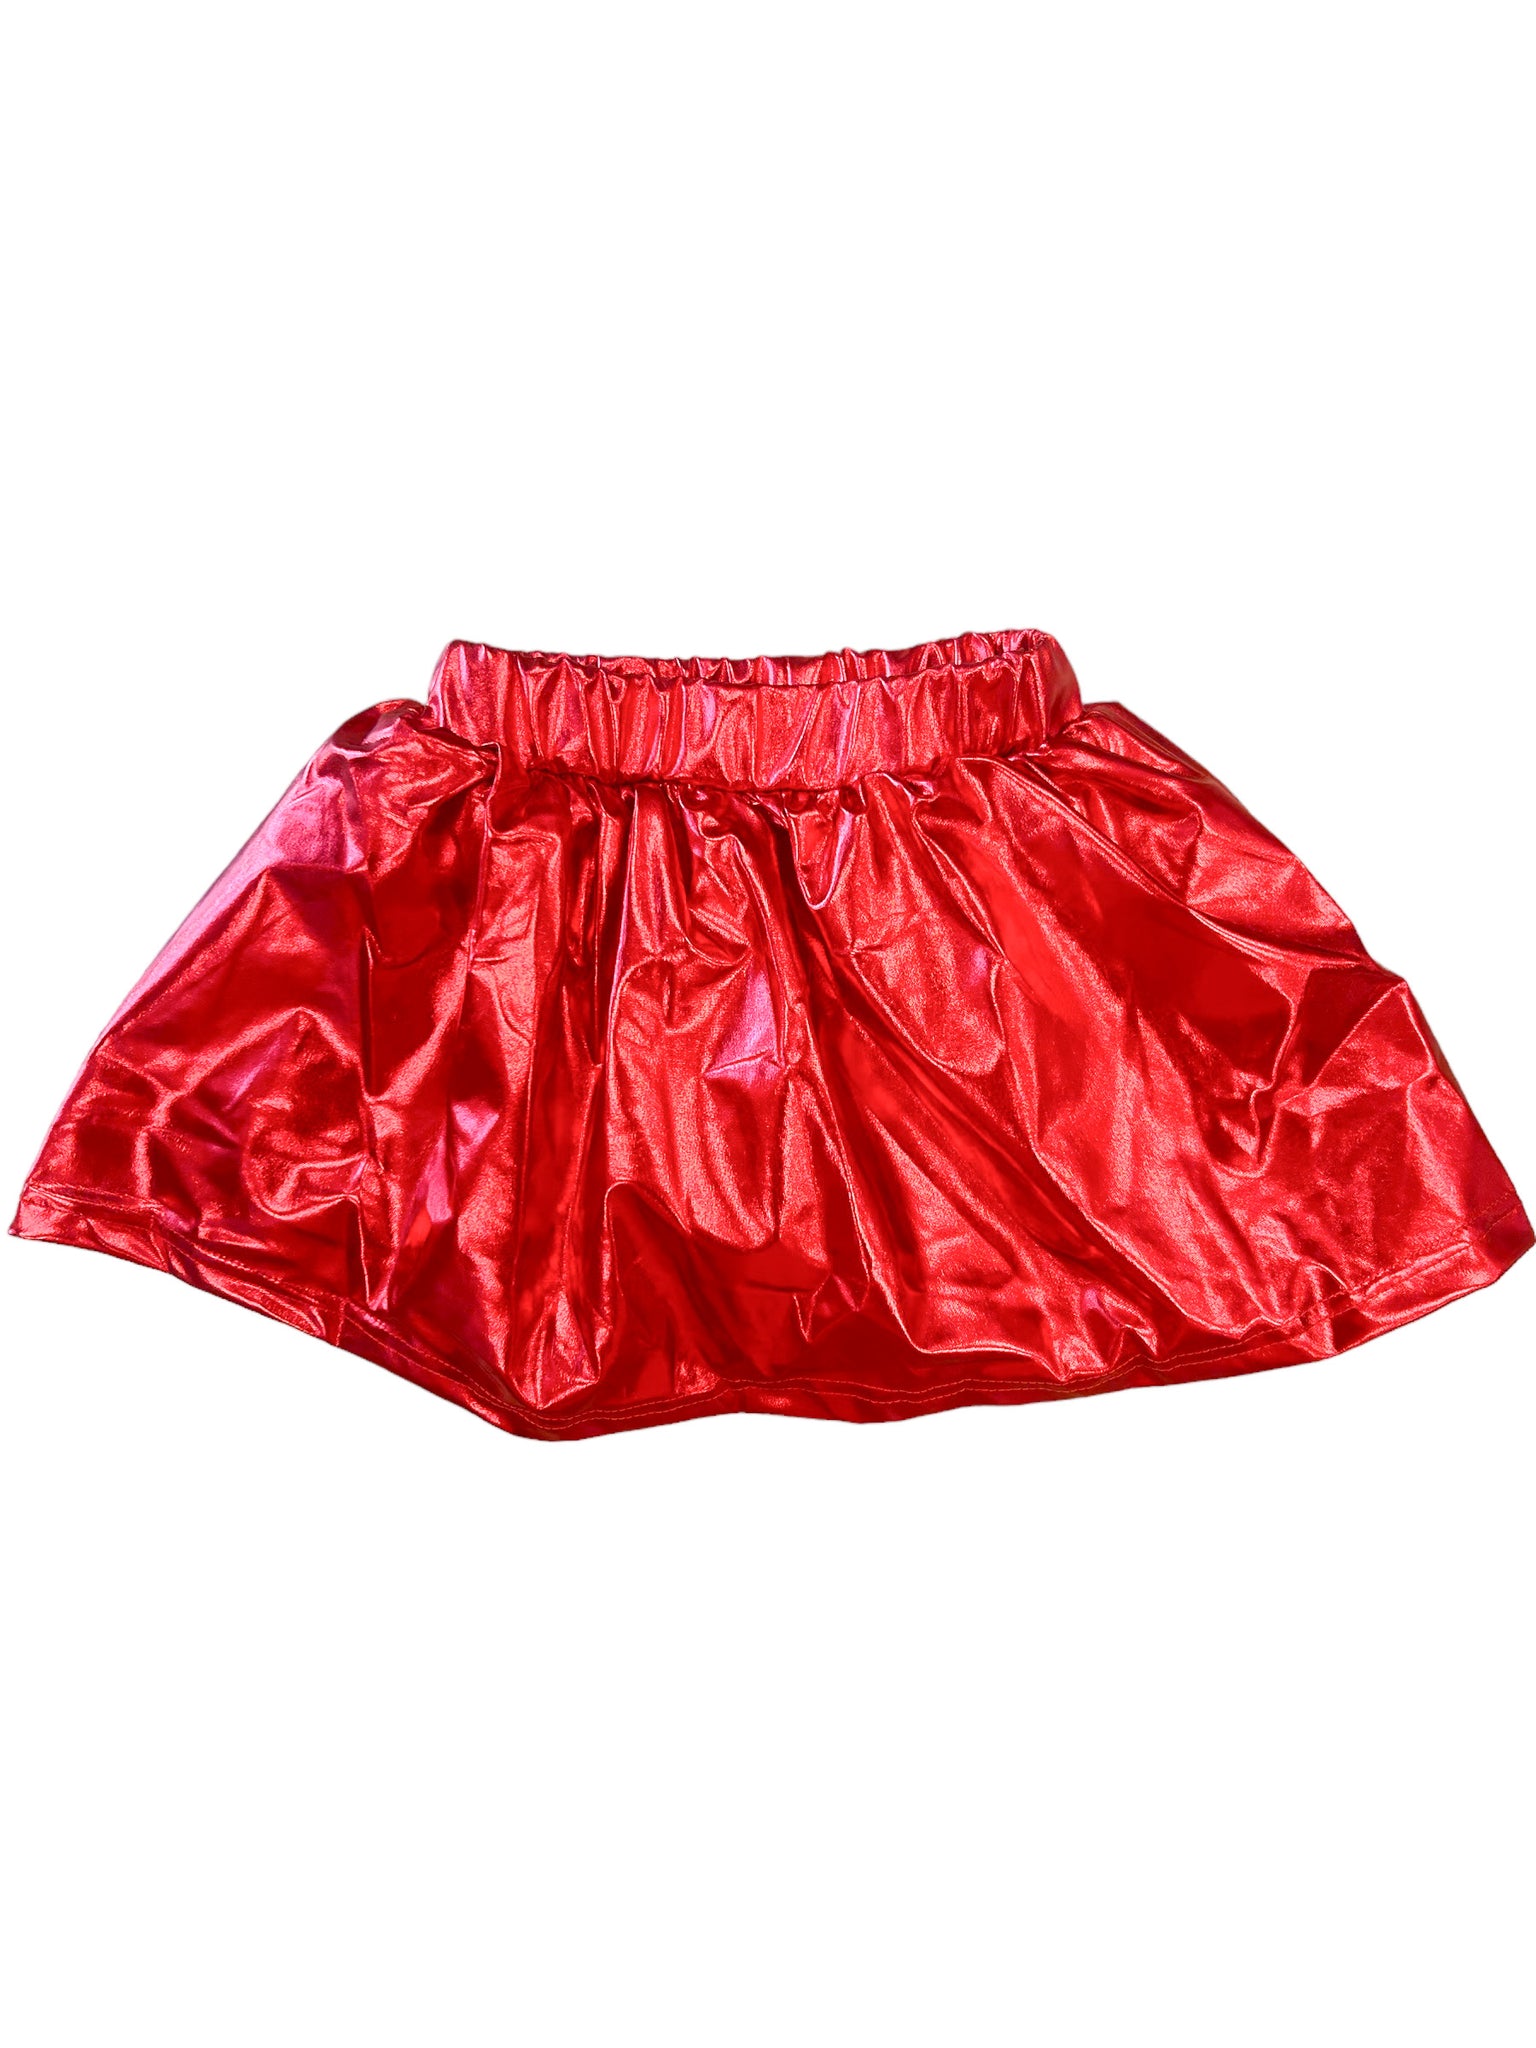 Red Metallic Skirt